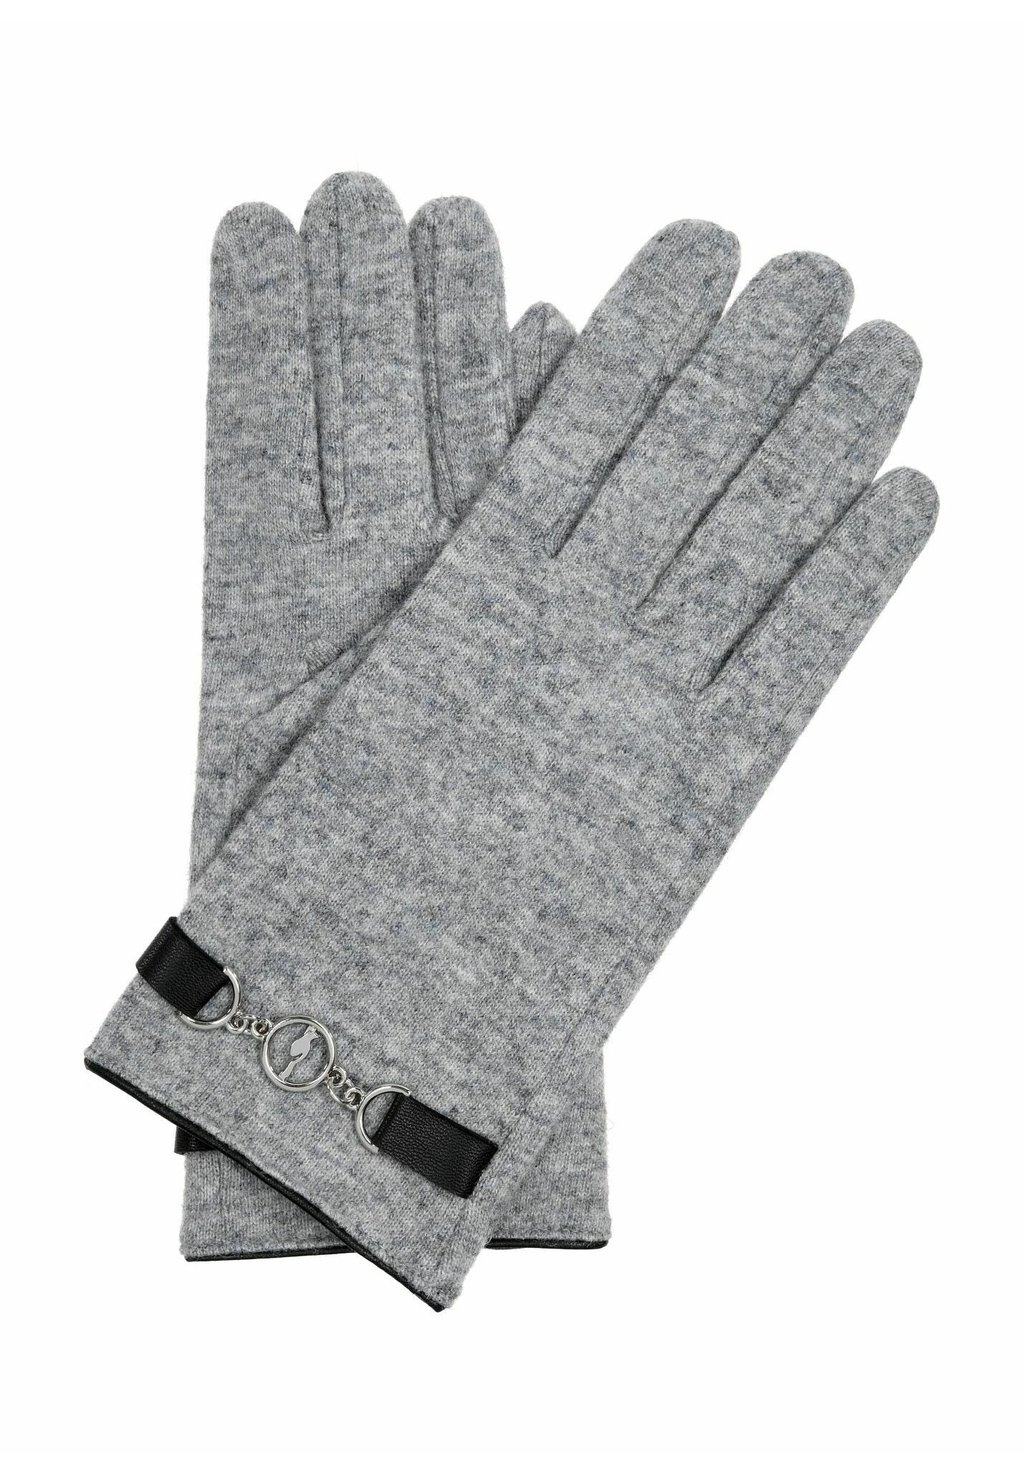 Перчатки OCHNIK, серый